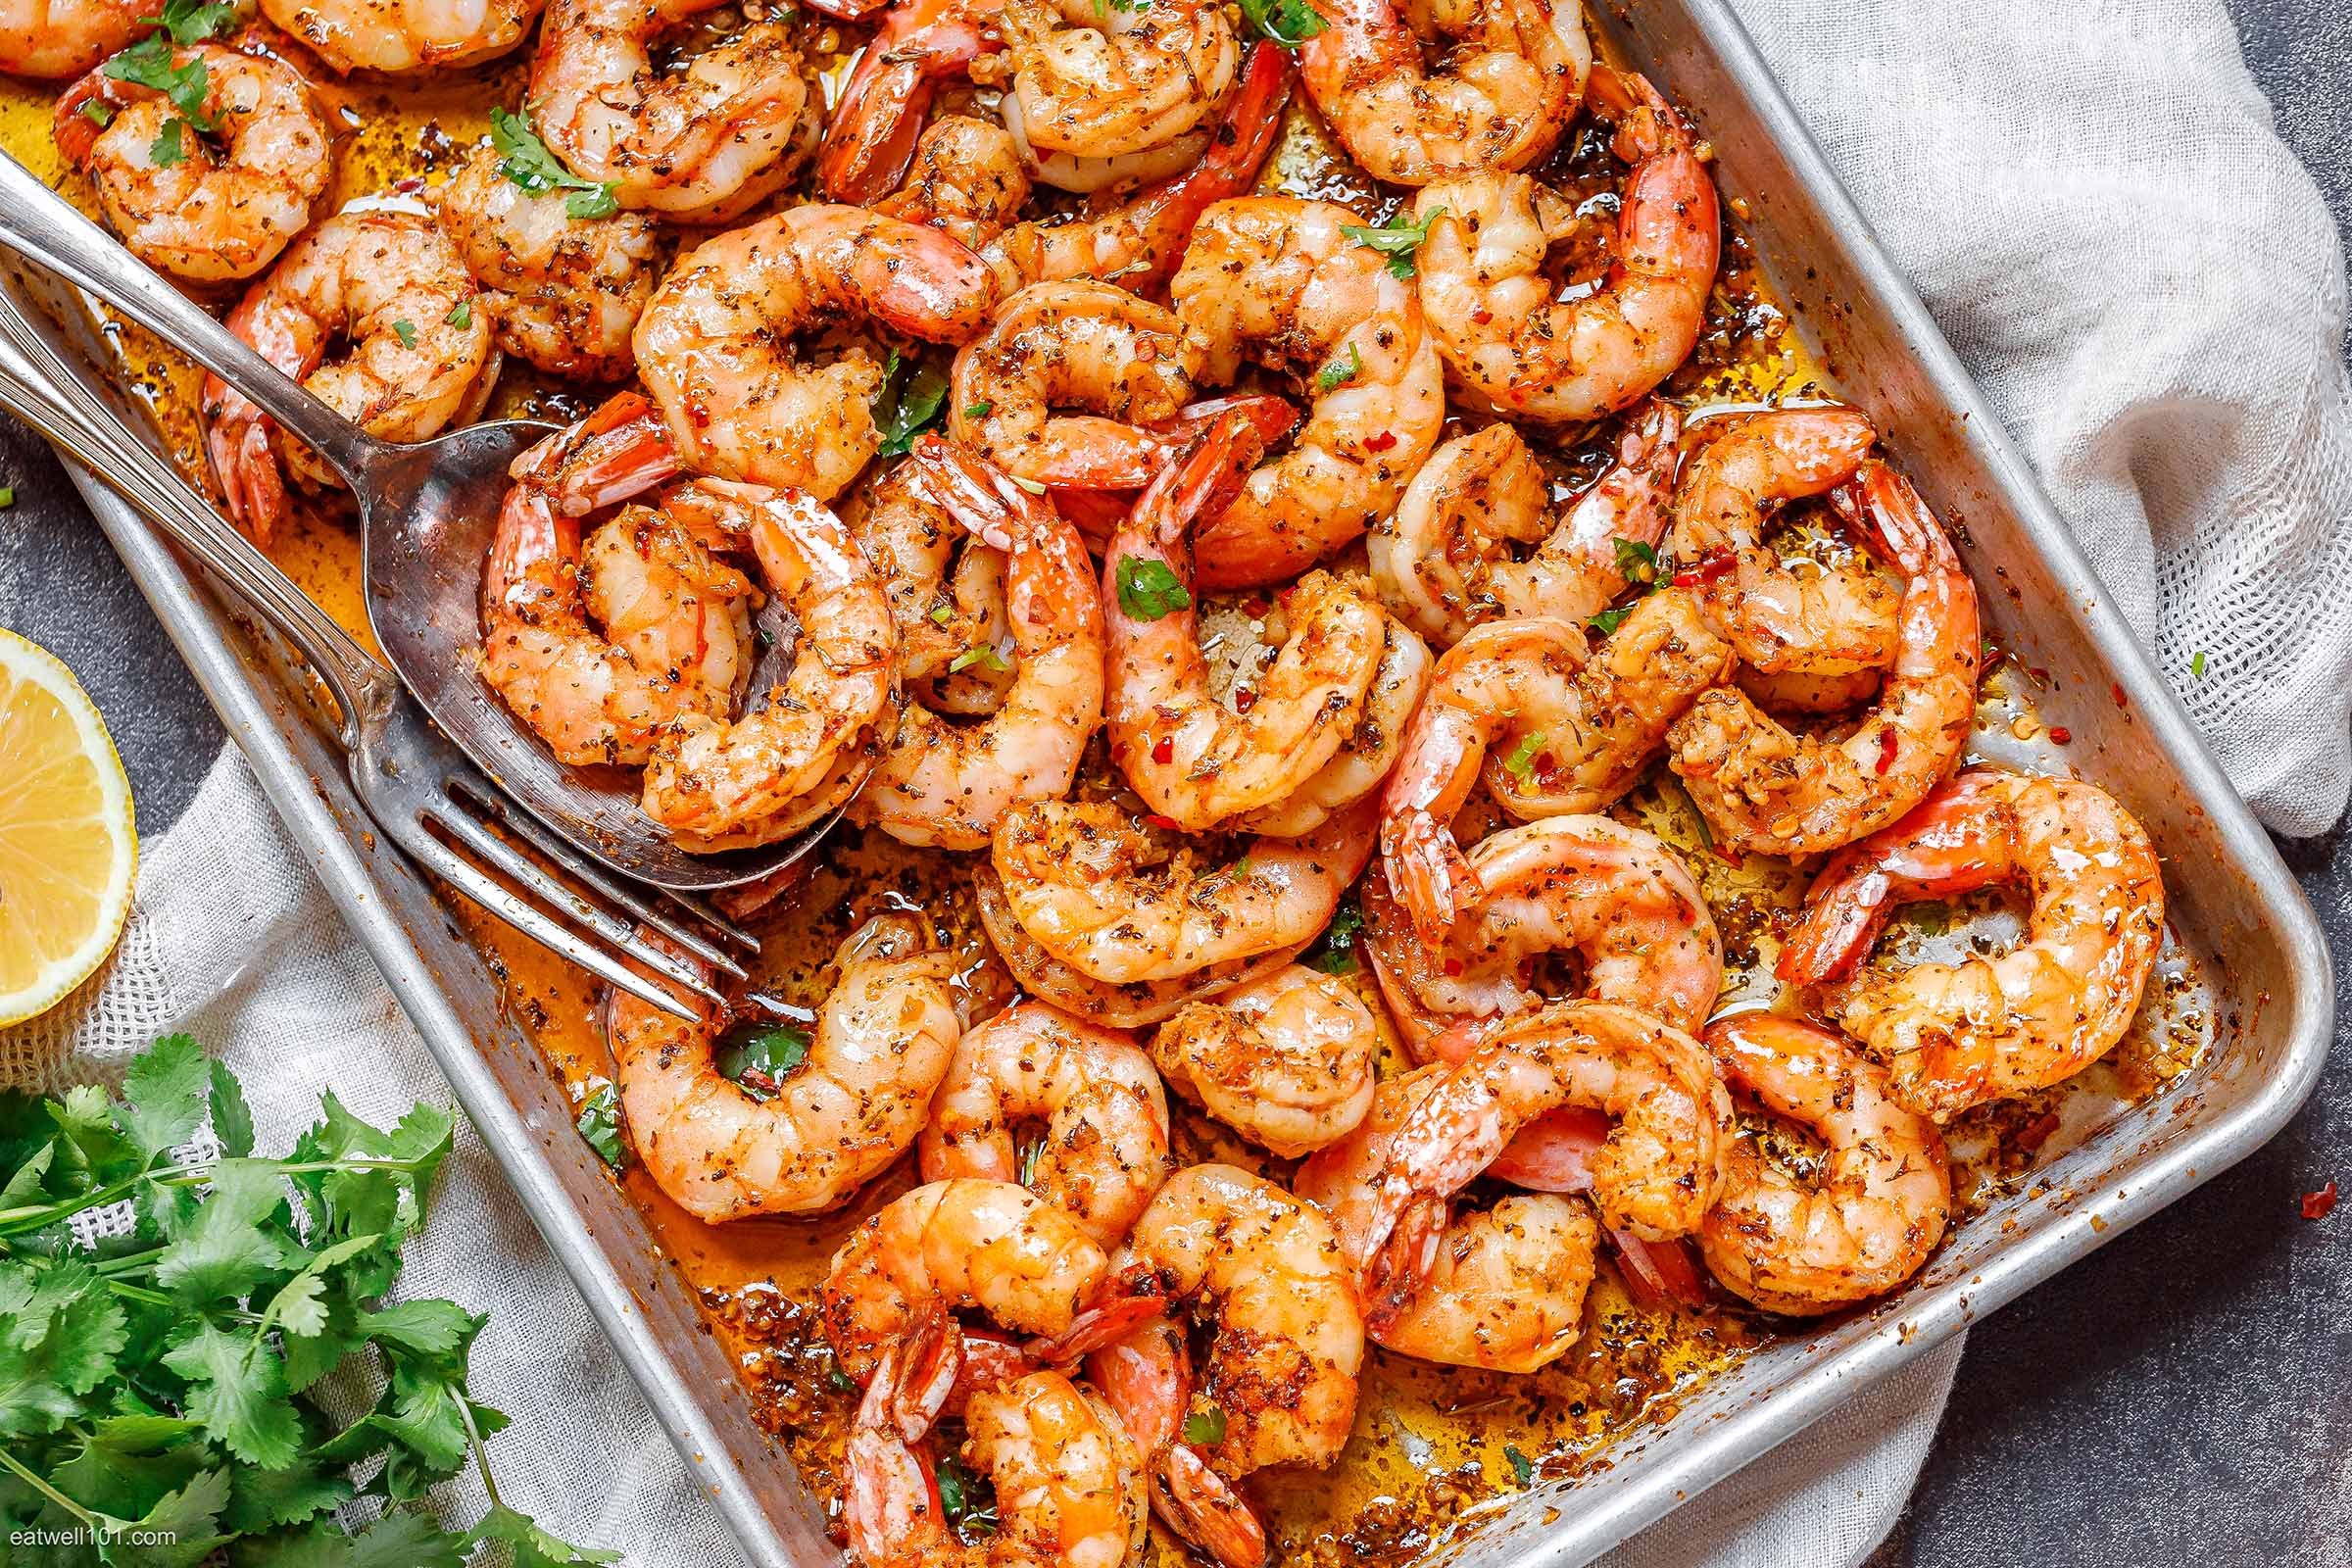 https://www.eatwell101.com/wp-content/uploads/2022/03/Sheet-Pan-Shrimp-Recipe-1.jpg